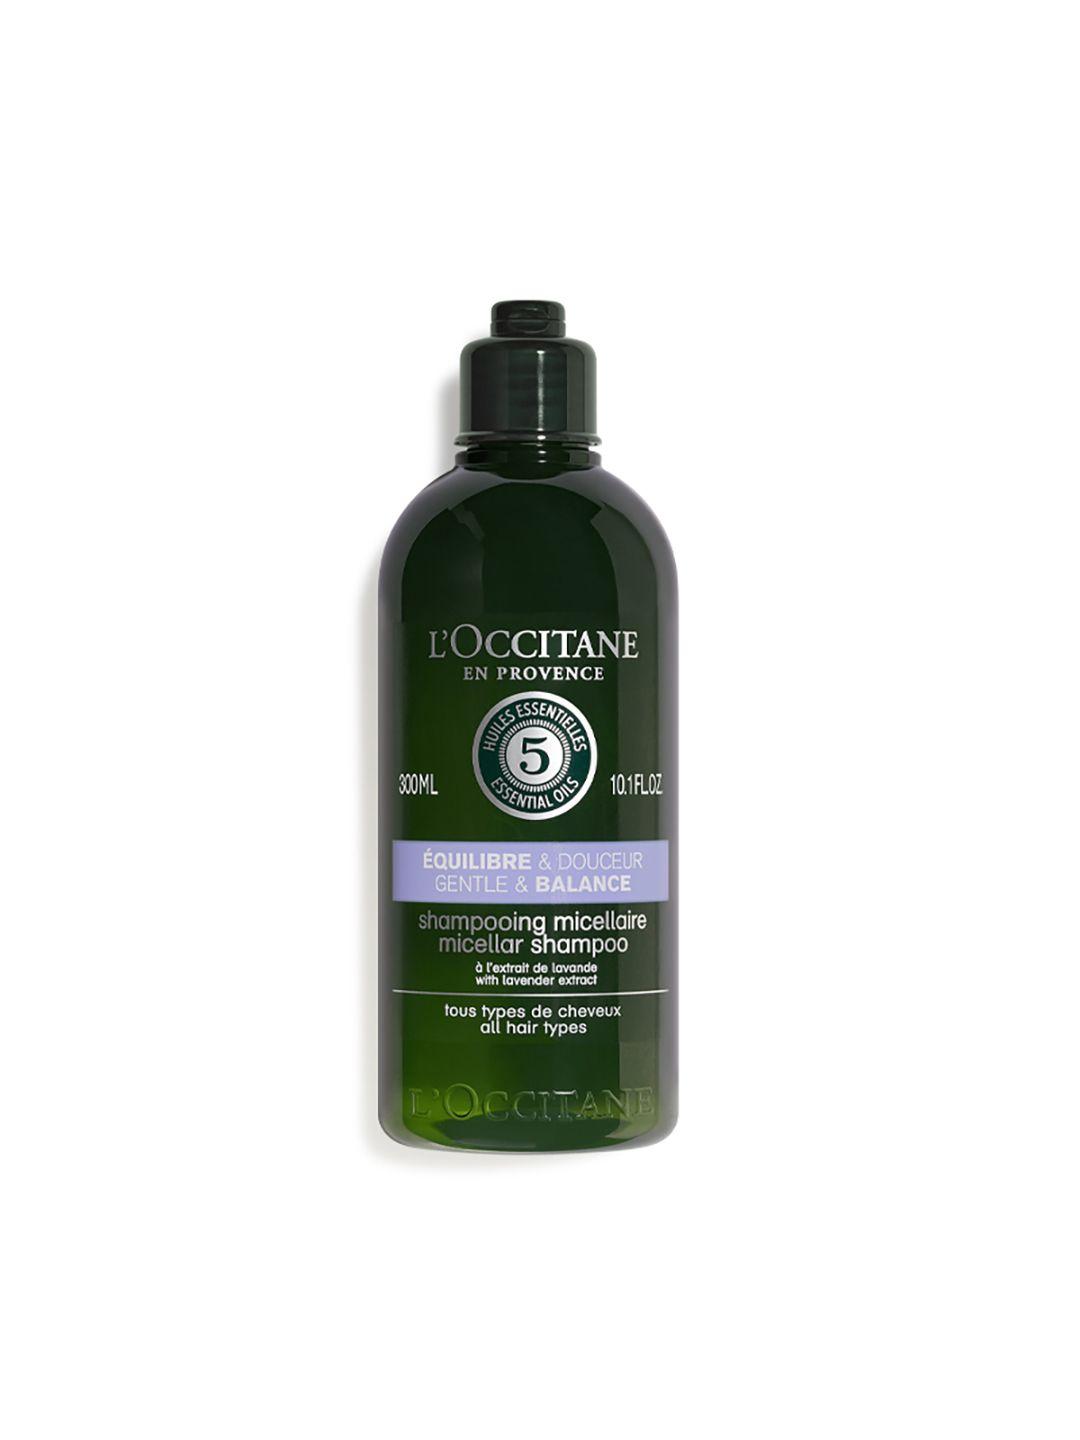 loccitane en provence gentle & balance micellar shampoo 300 ml